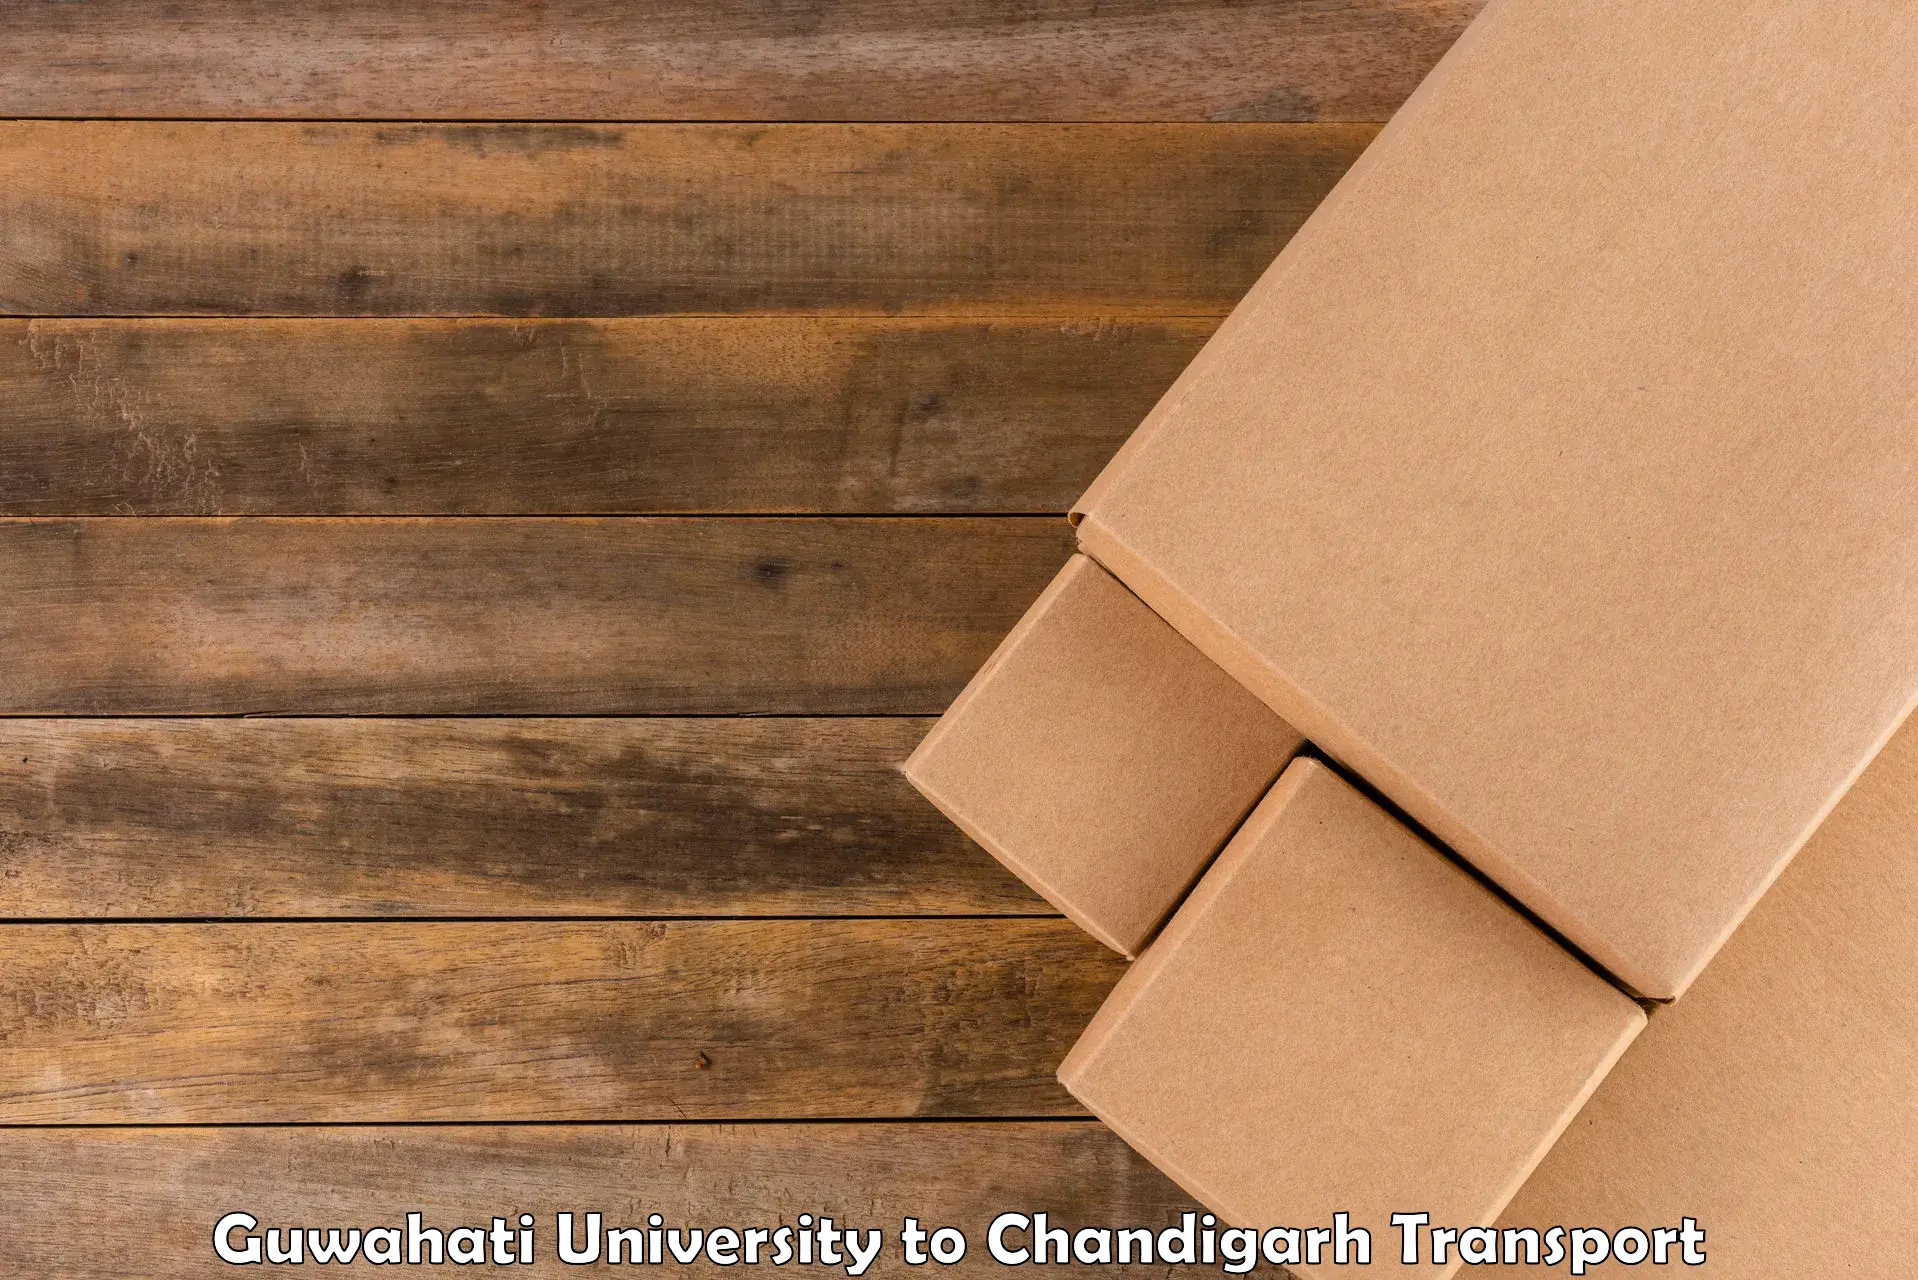 Goods delivery service Guwahati University to Chandigarh